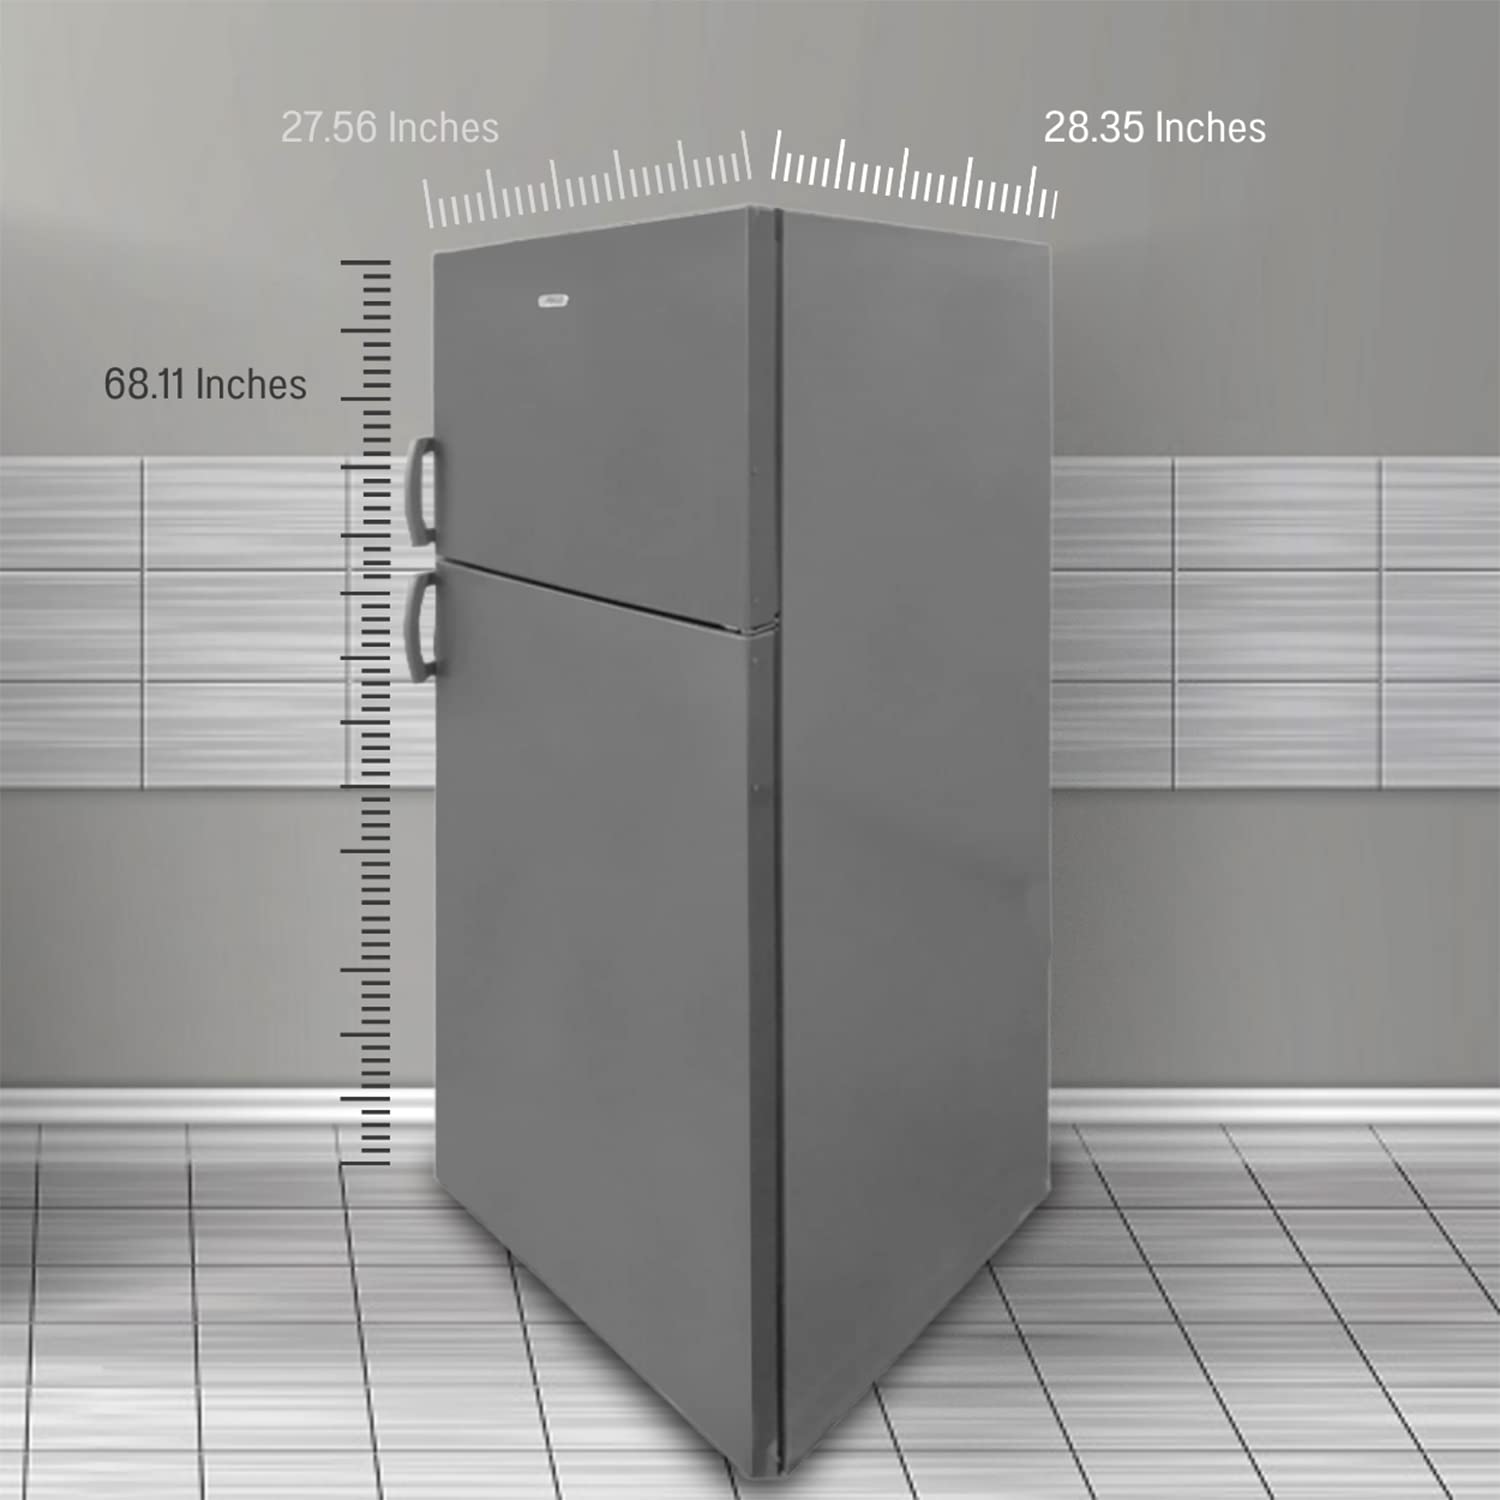 Equator Advanced Appliances 14.3 cu. ft. Freestanding Top Freezer Refrigerator Frost Free, Reversible Door, Energy Star (Europe) Stainless